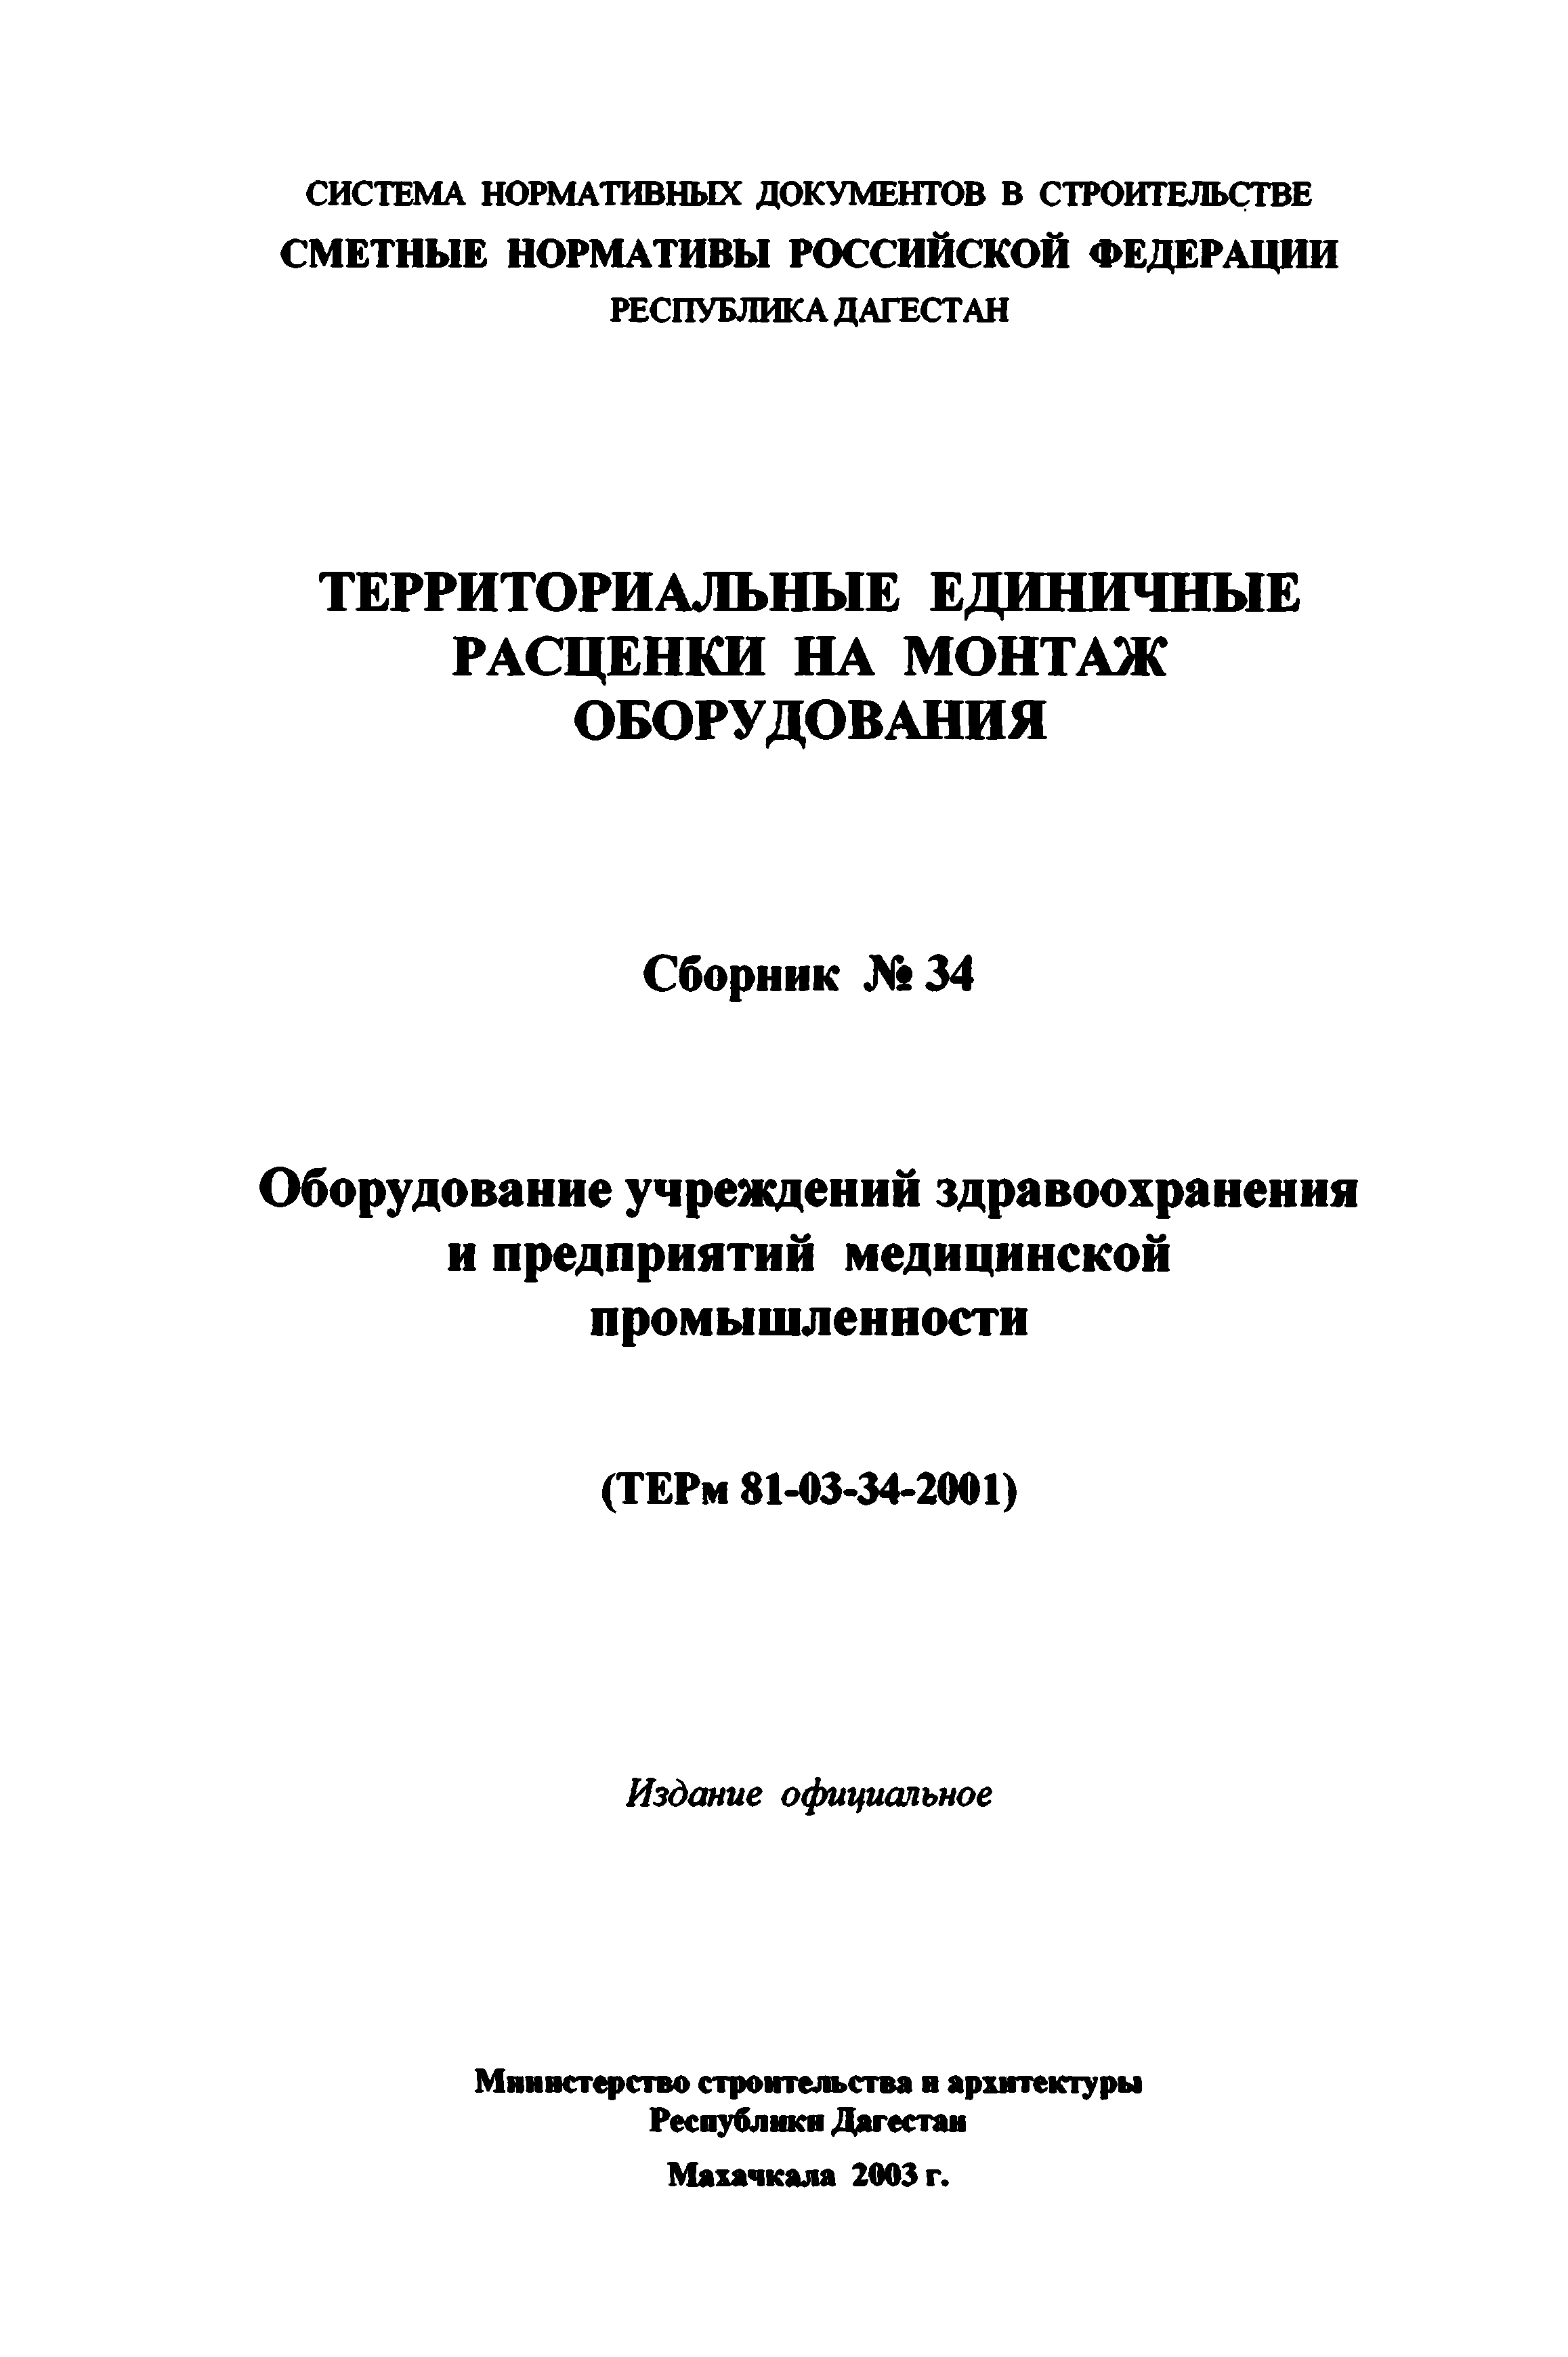 ТЕРм Республика Дагестан 2001-34